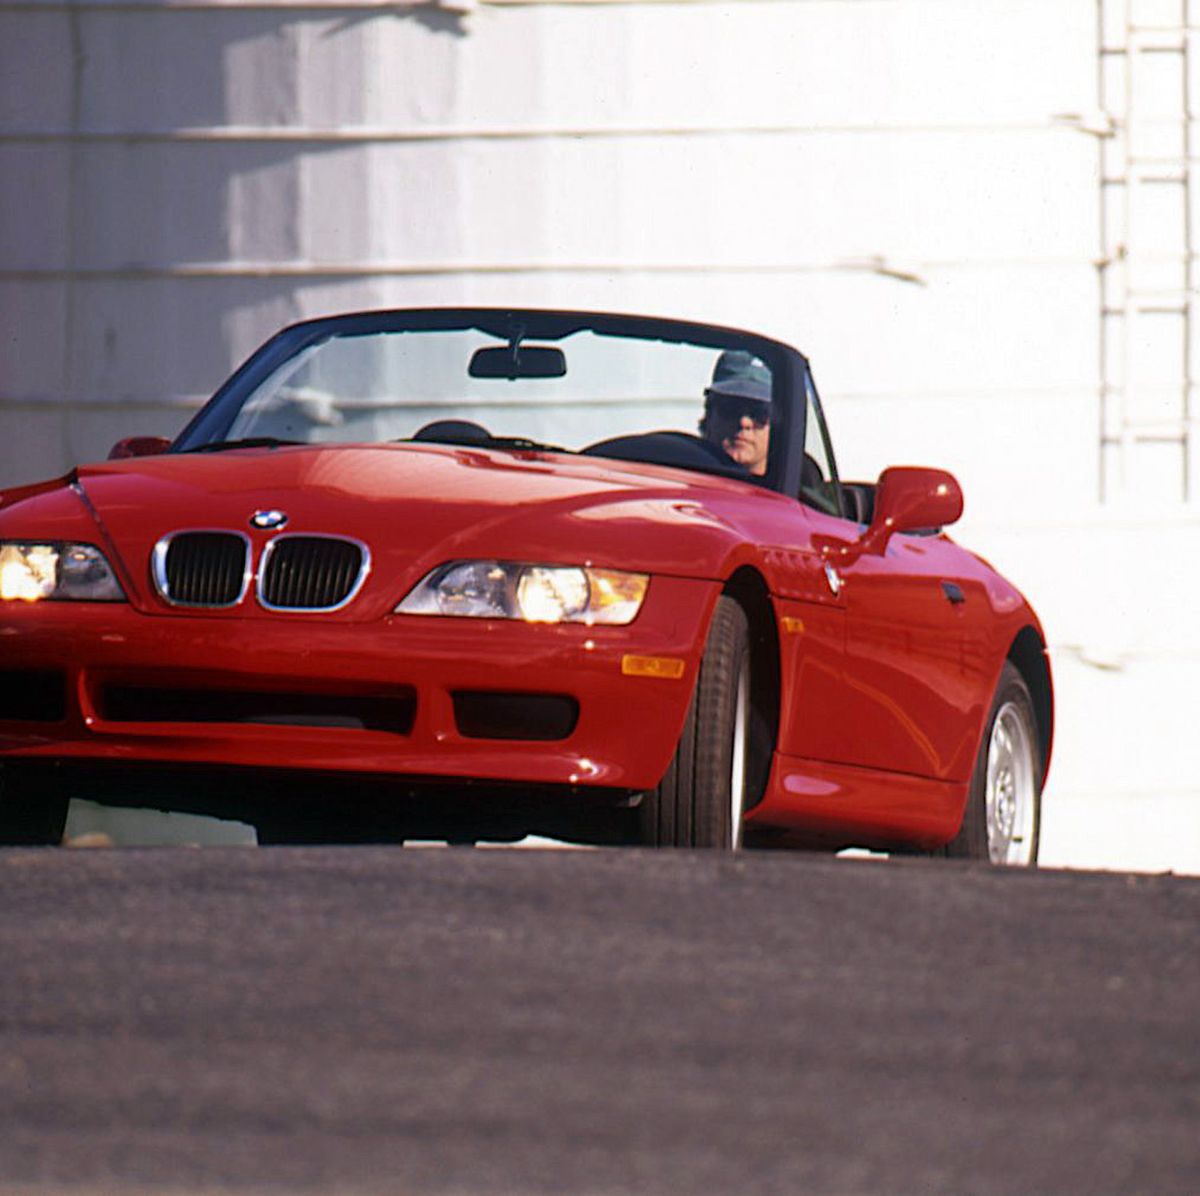 1996 BMW Z3 Roadster: The OG Z3 Was 'a Shrewd Execution